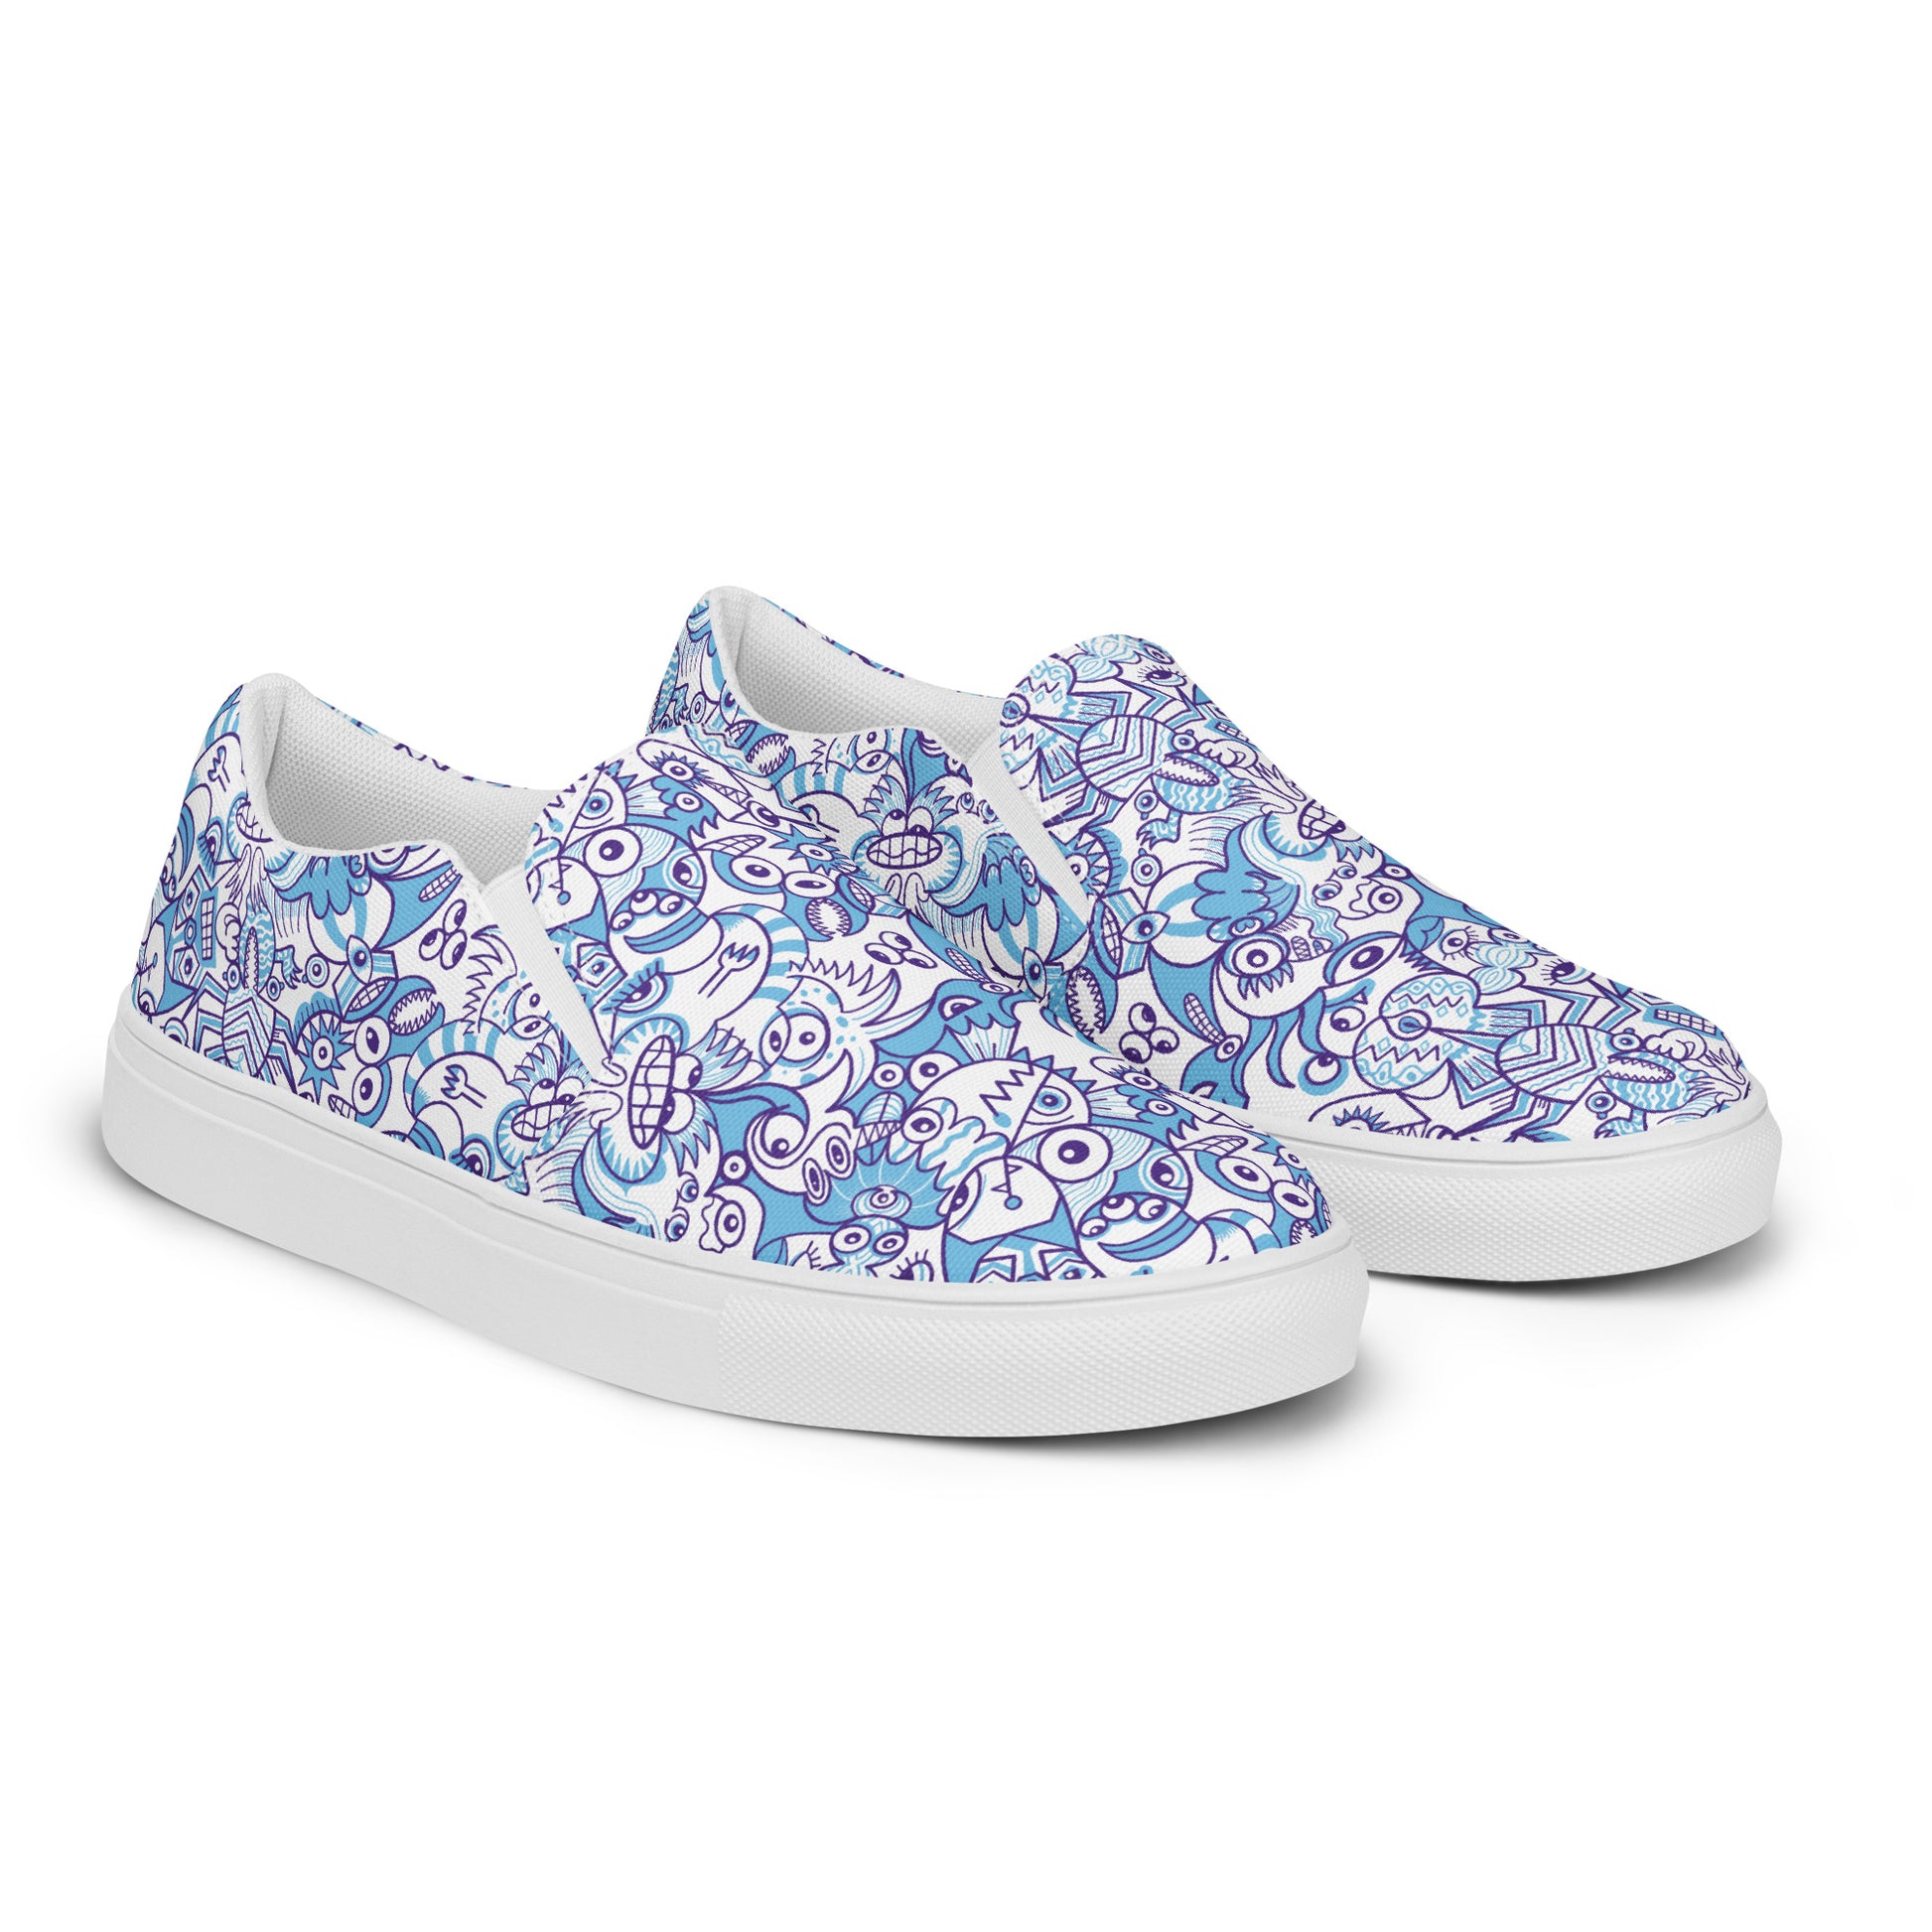 Whimsical Blue Doodle Critterscape pattern design Women’s slip-on canvas shoes. Overview